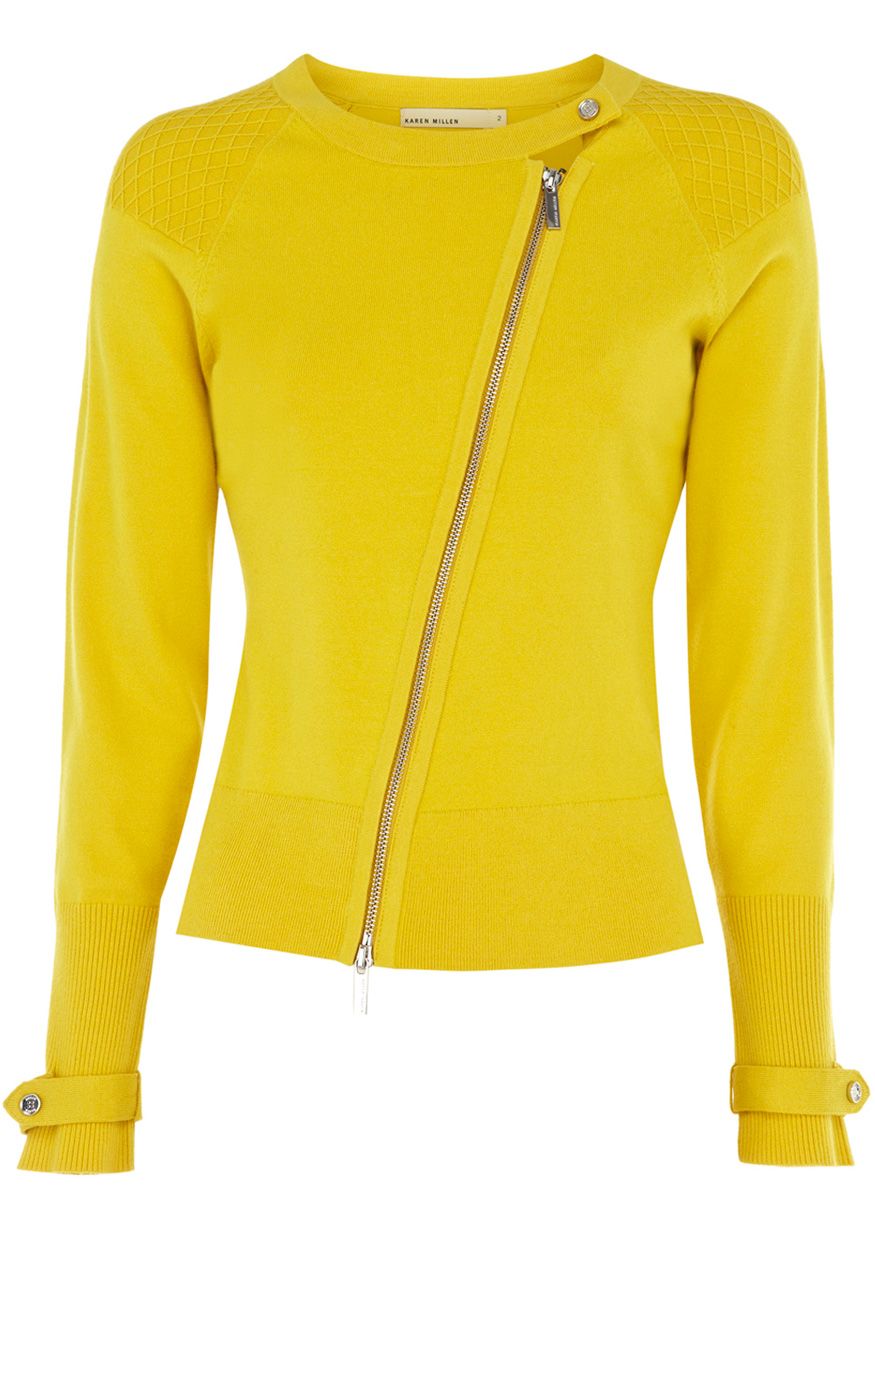 Karen Millen Zippy Texture Knit Cardi in Yellow | Lyst